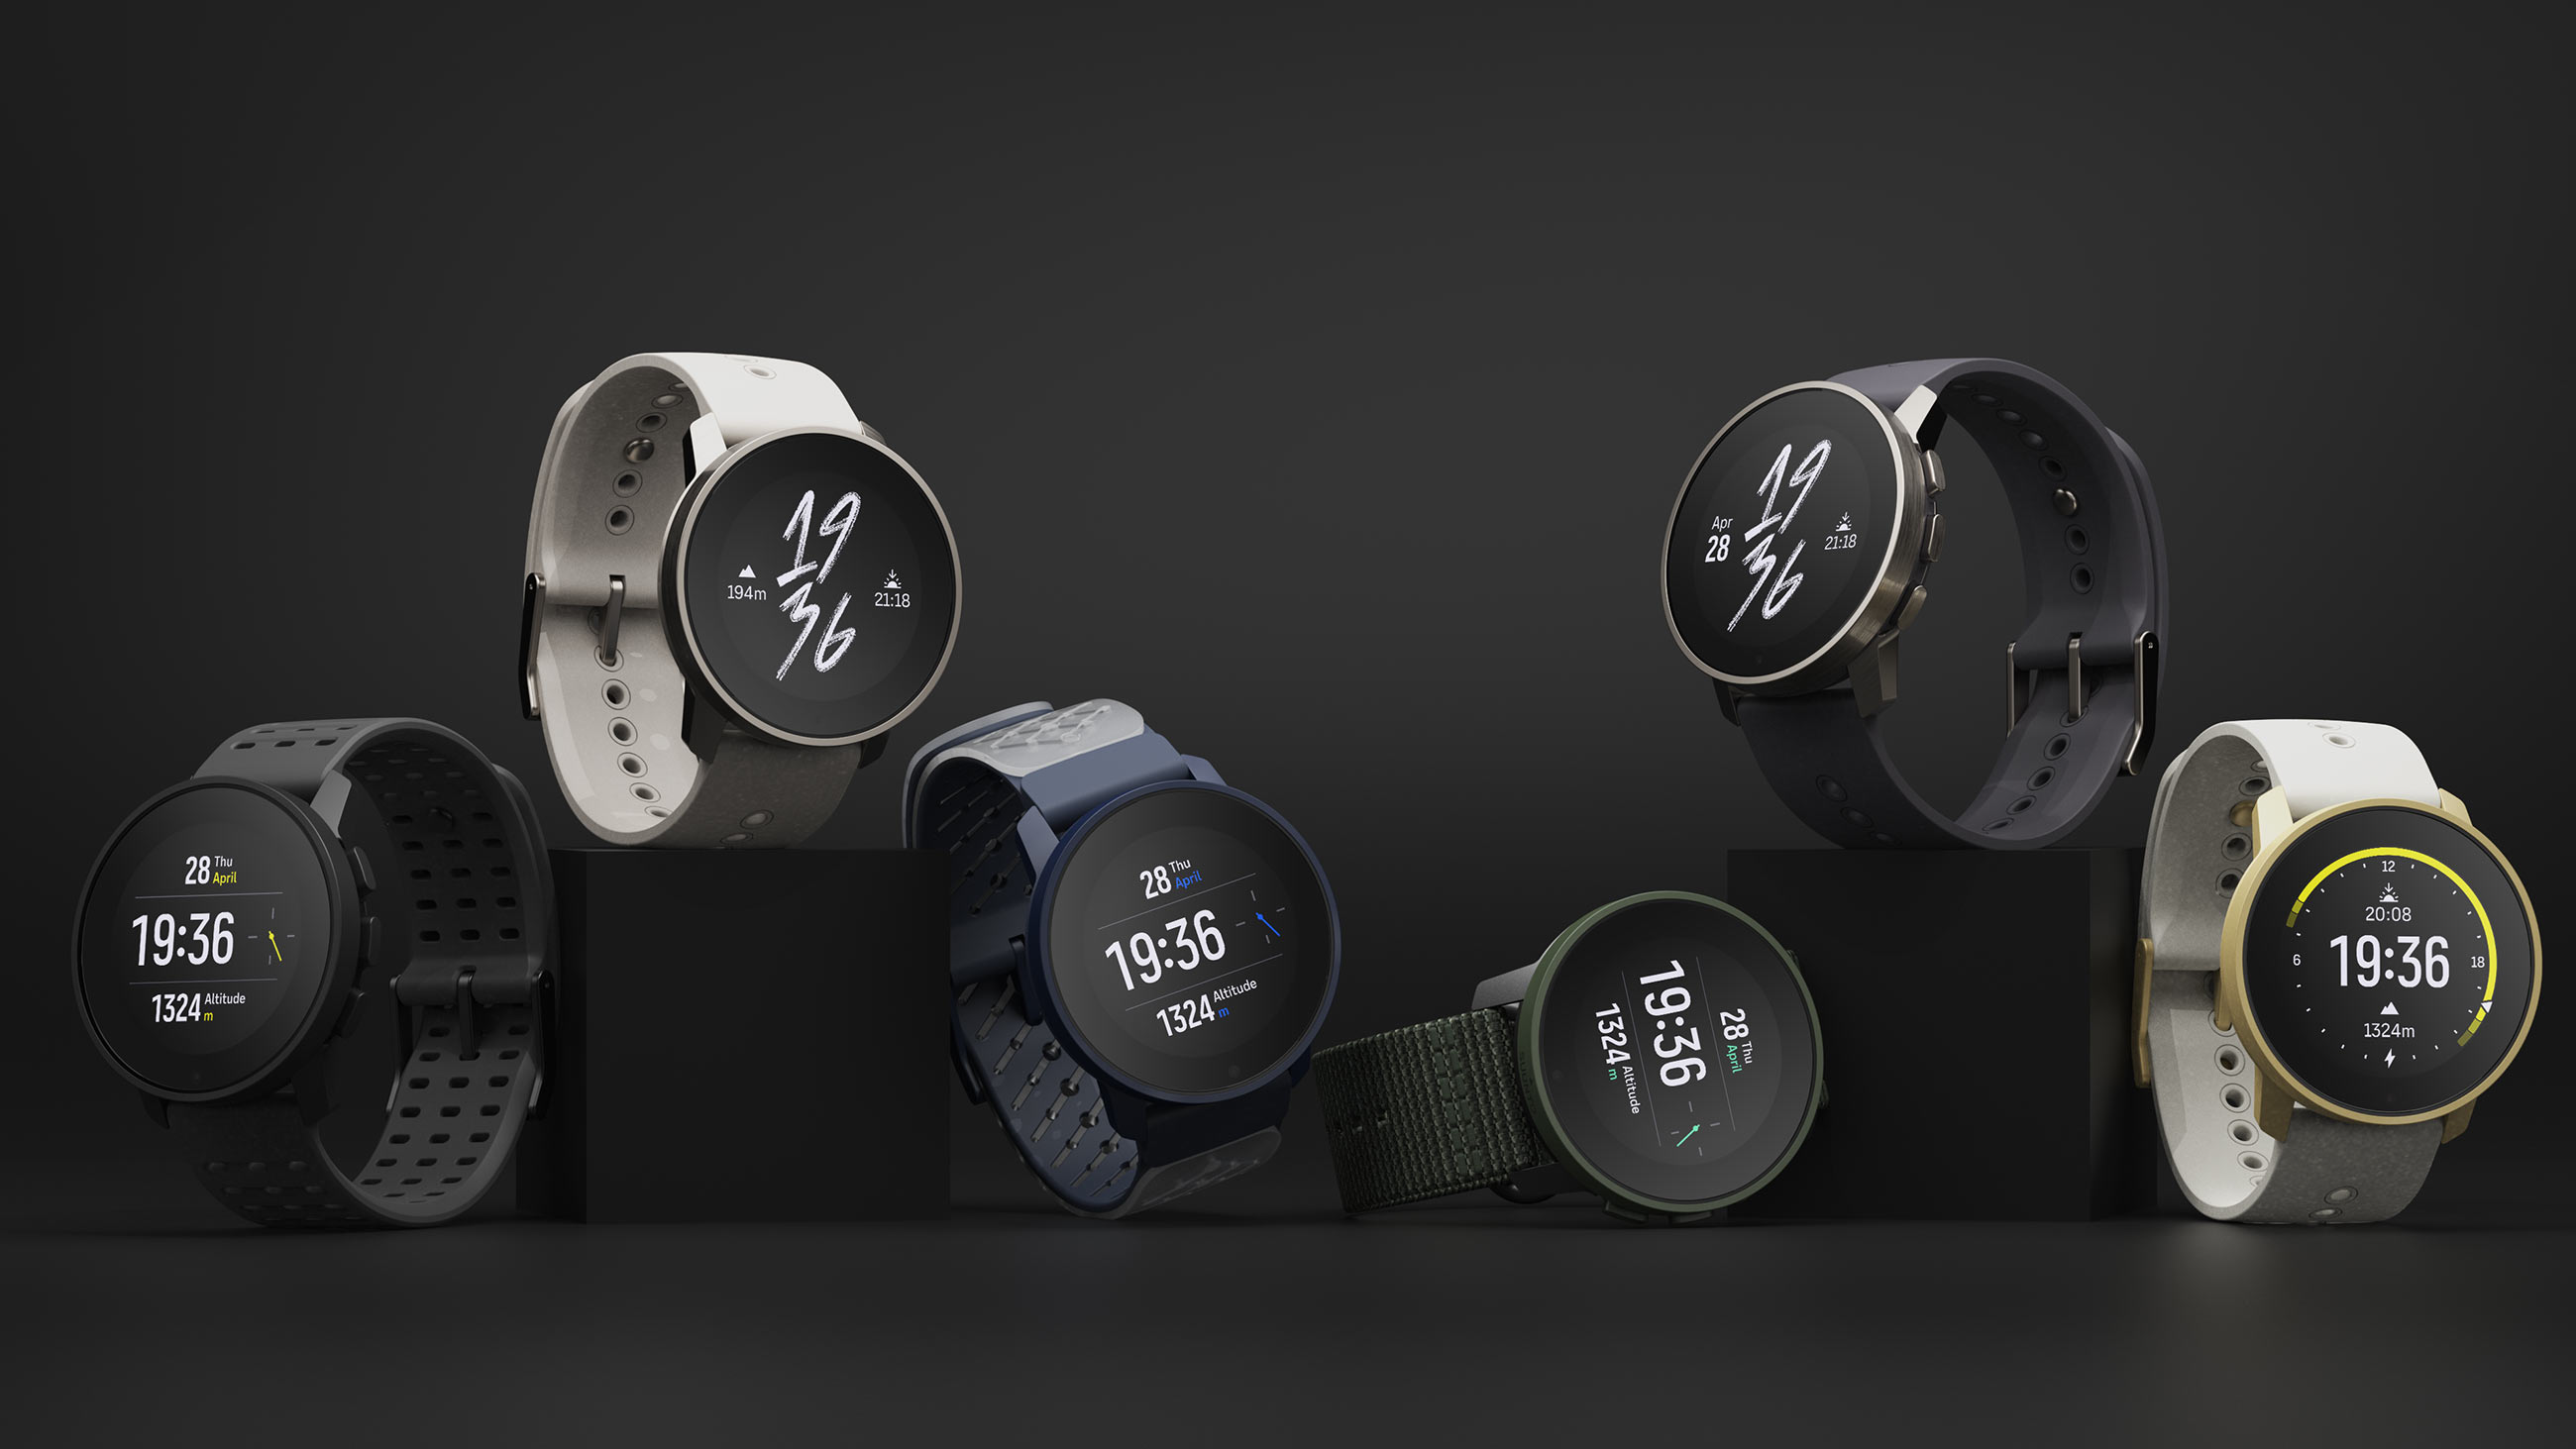 suunto 9 peak pro outdoor smartwatch collection and color options